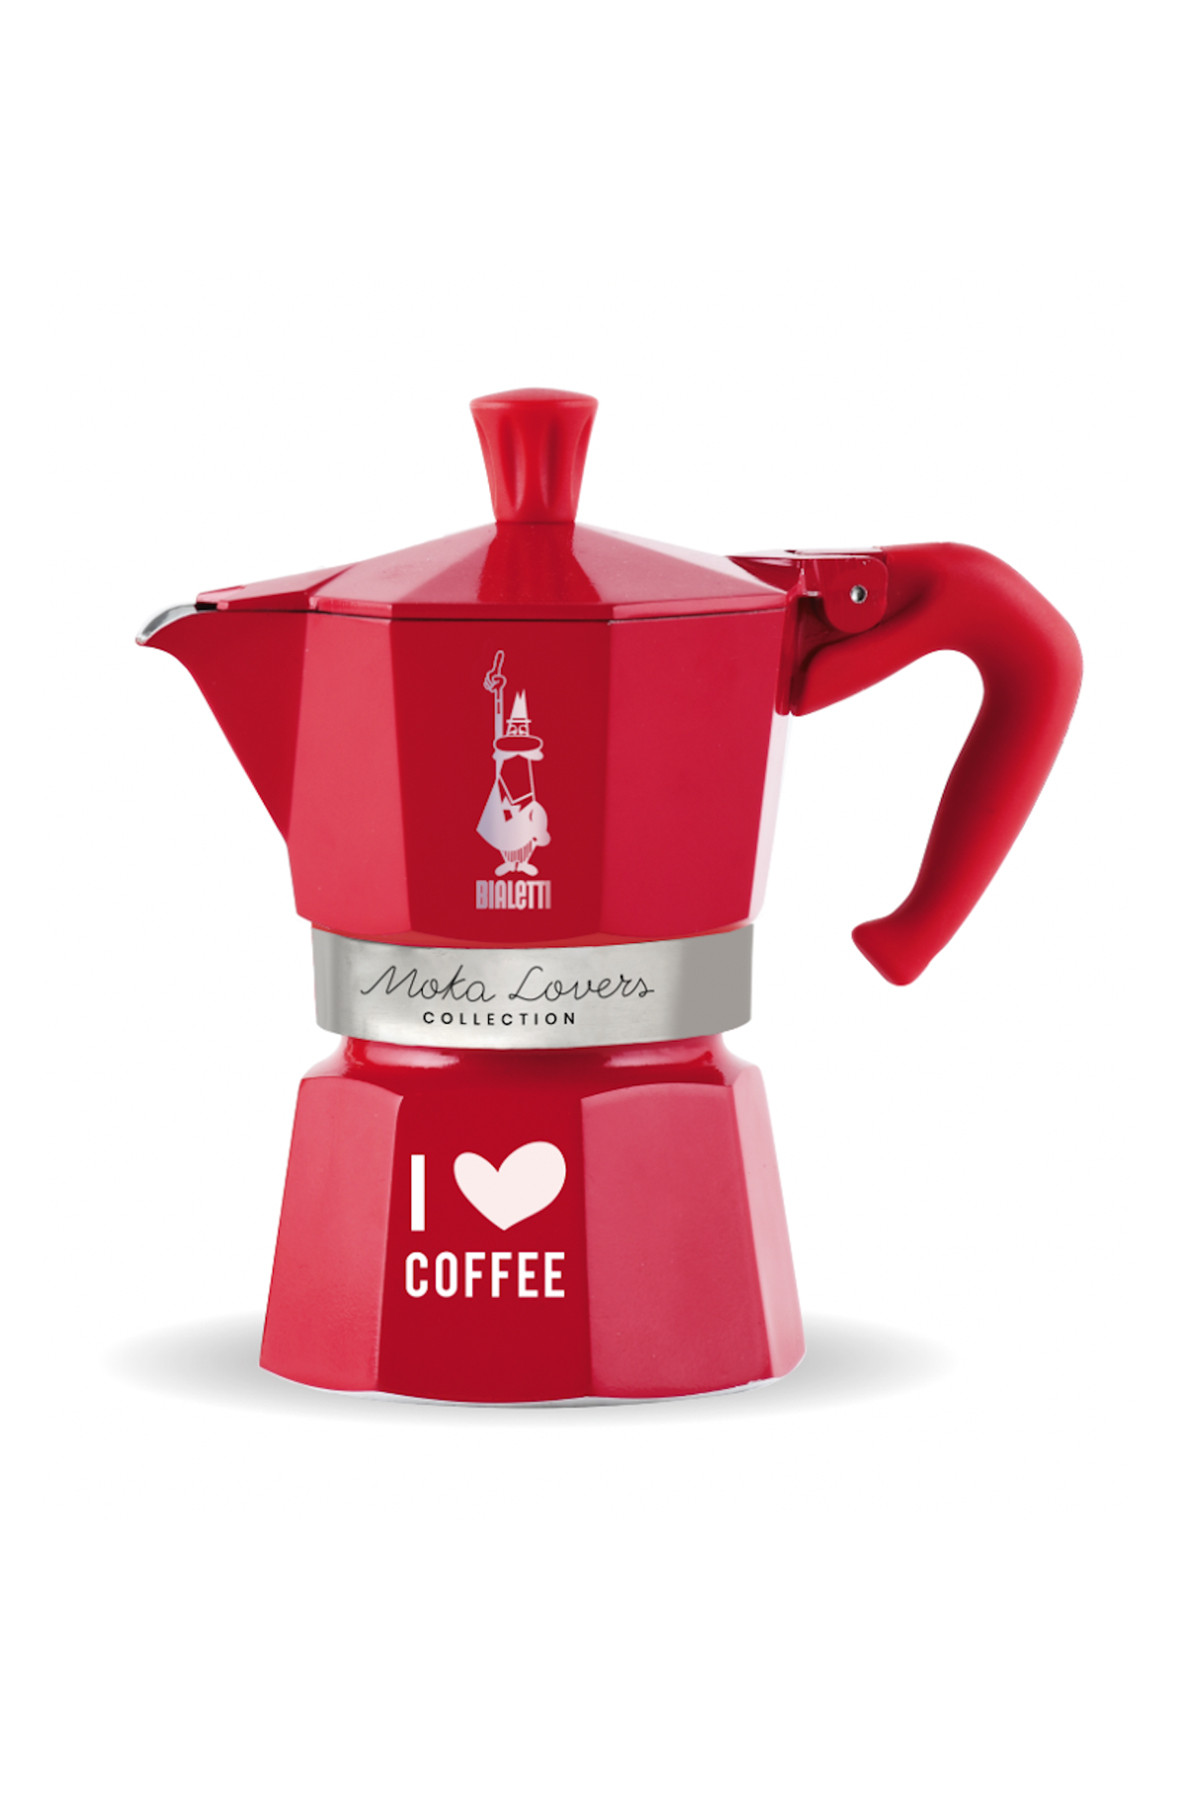 https://media.heirol.fi/584977/1200/moka-express-red-6-cups-i-love-coffee_.jpg